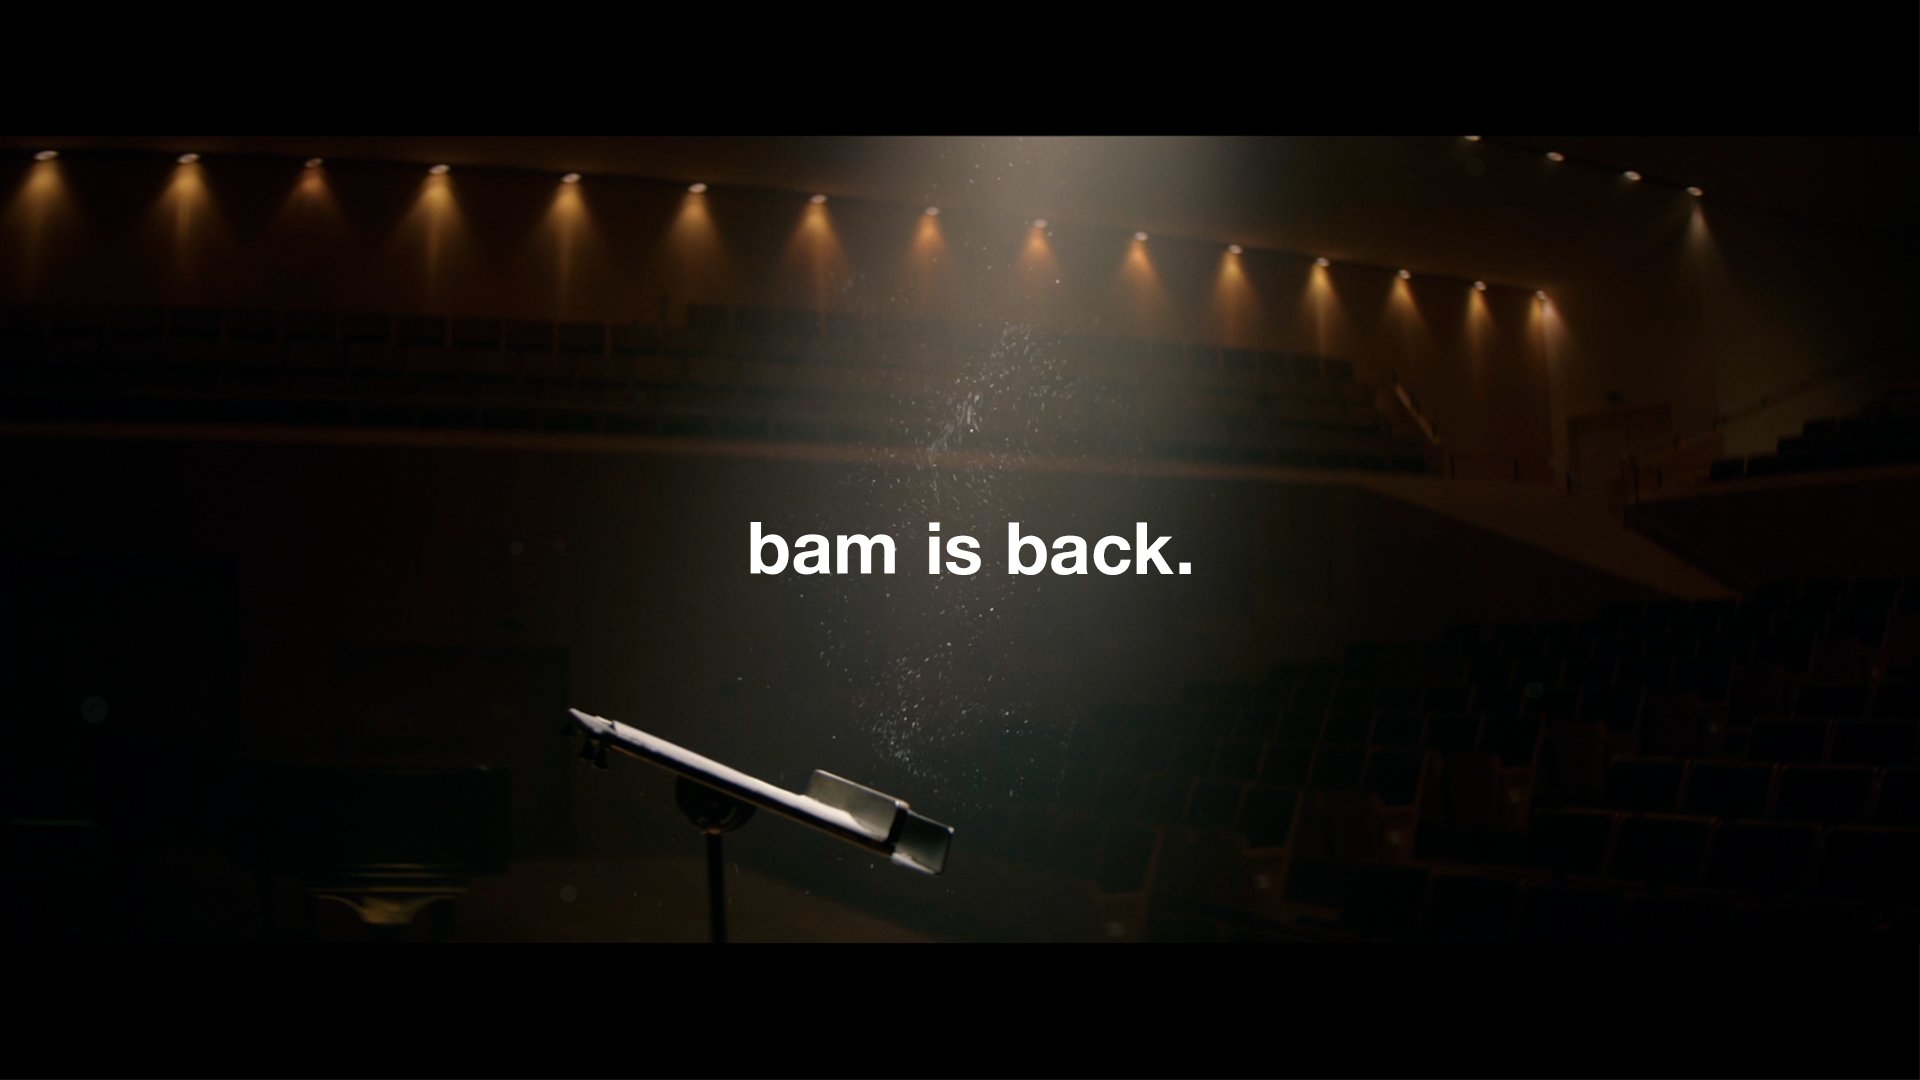 bam is back